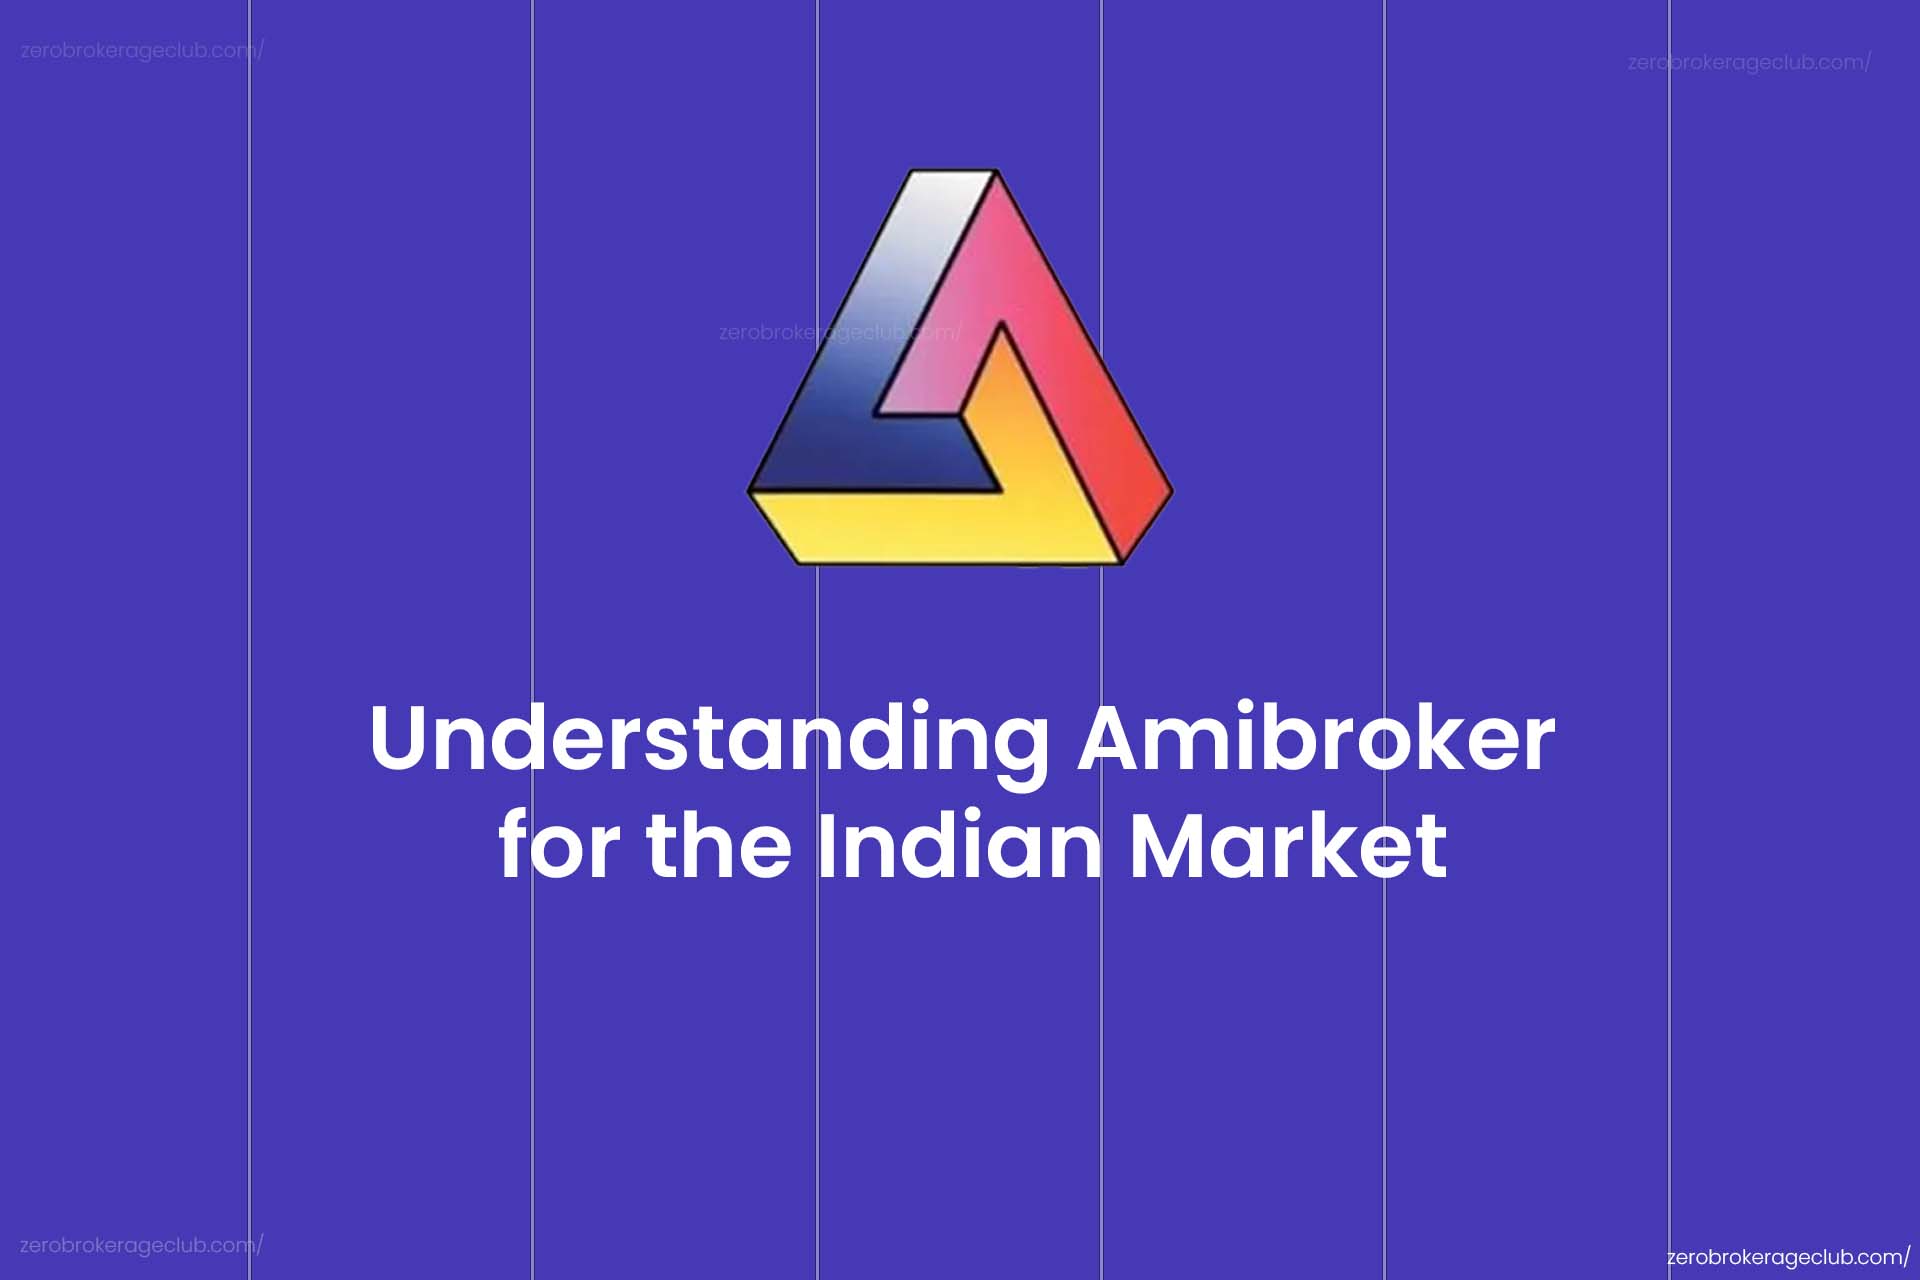 Understanding Amibroker for the Indian Market